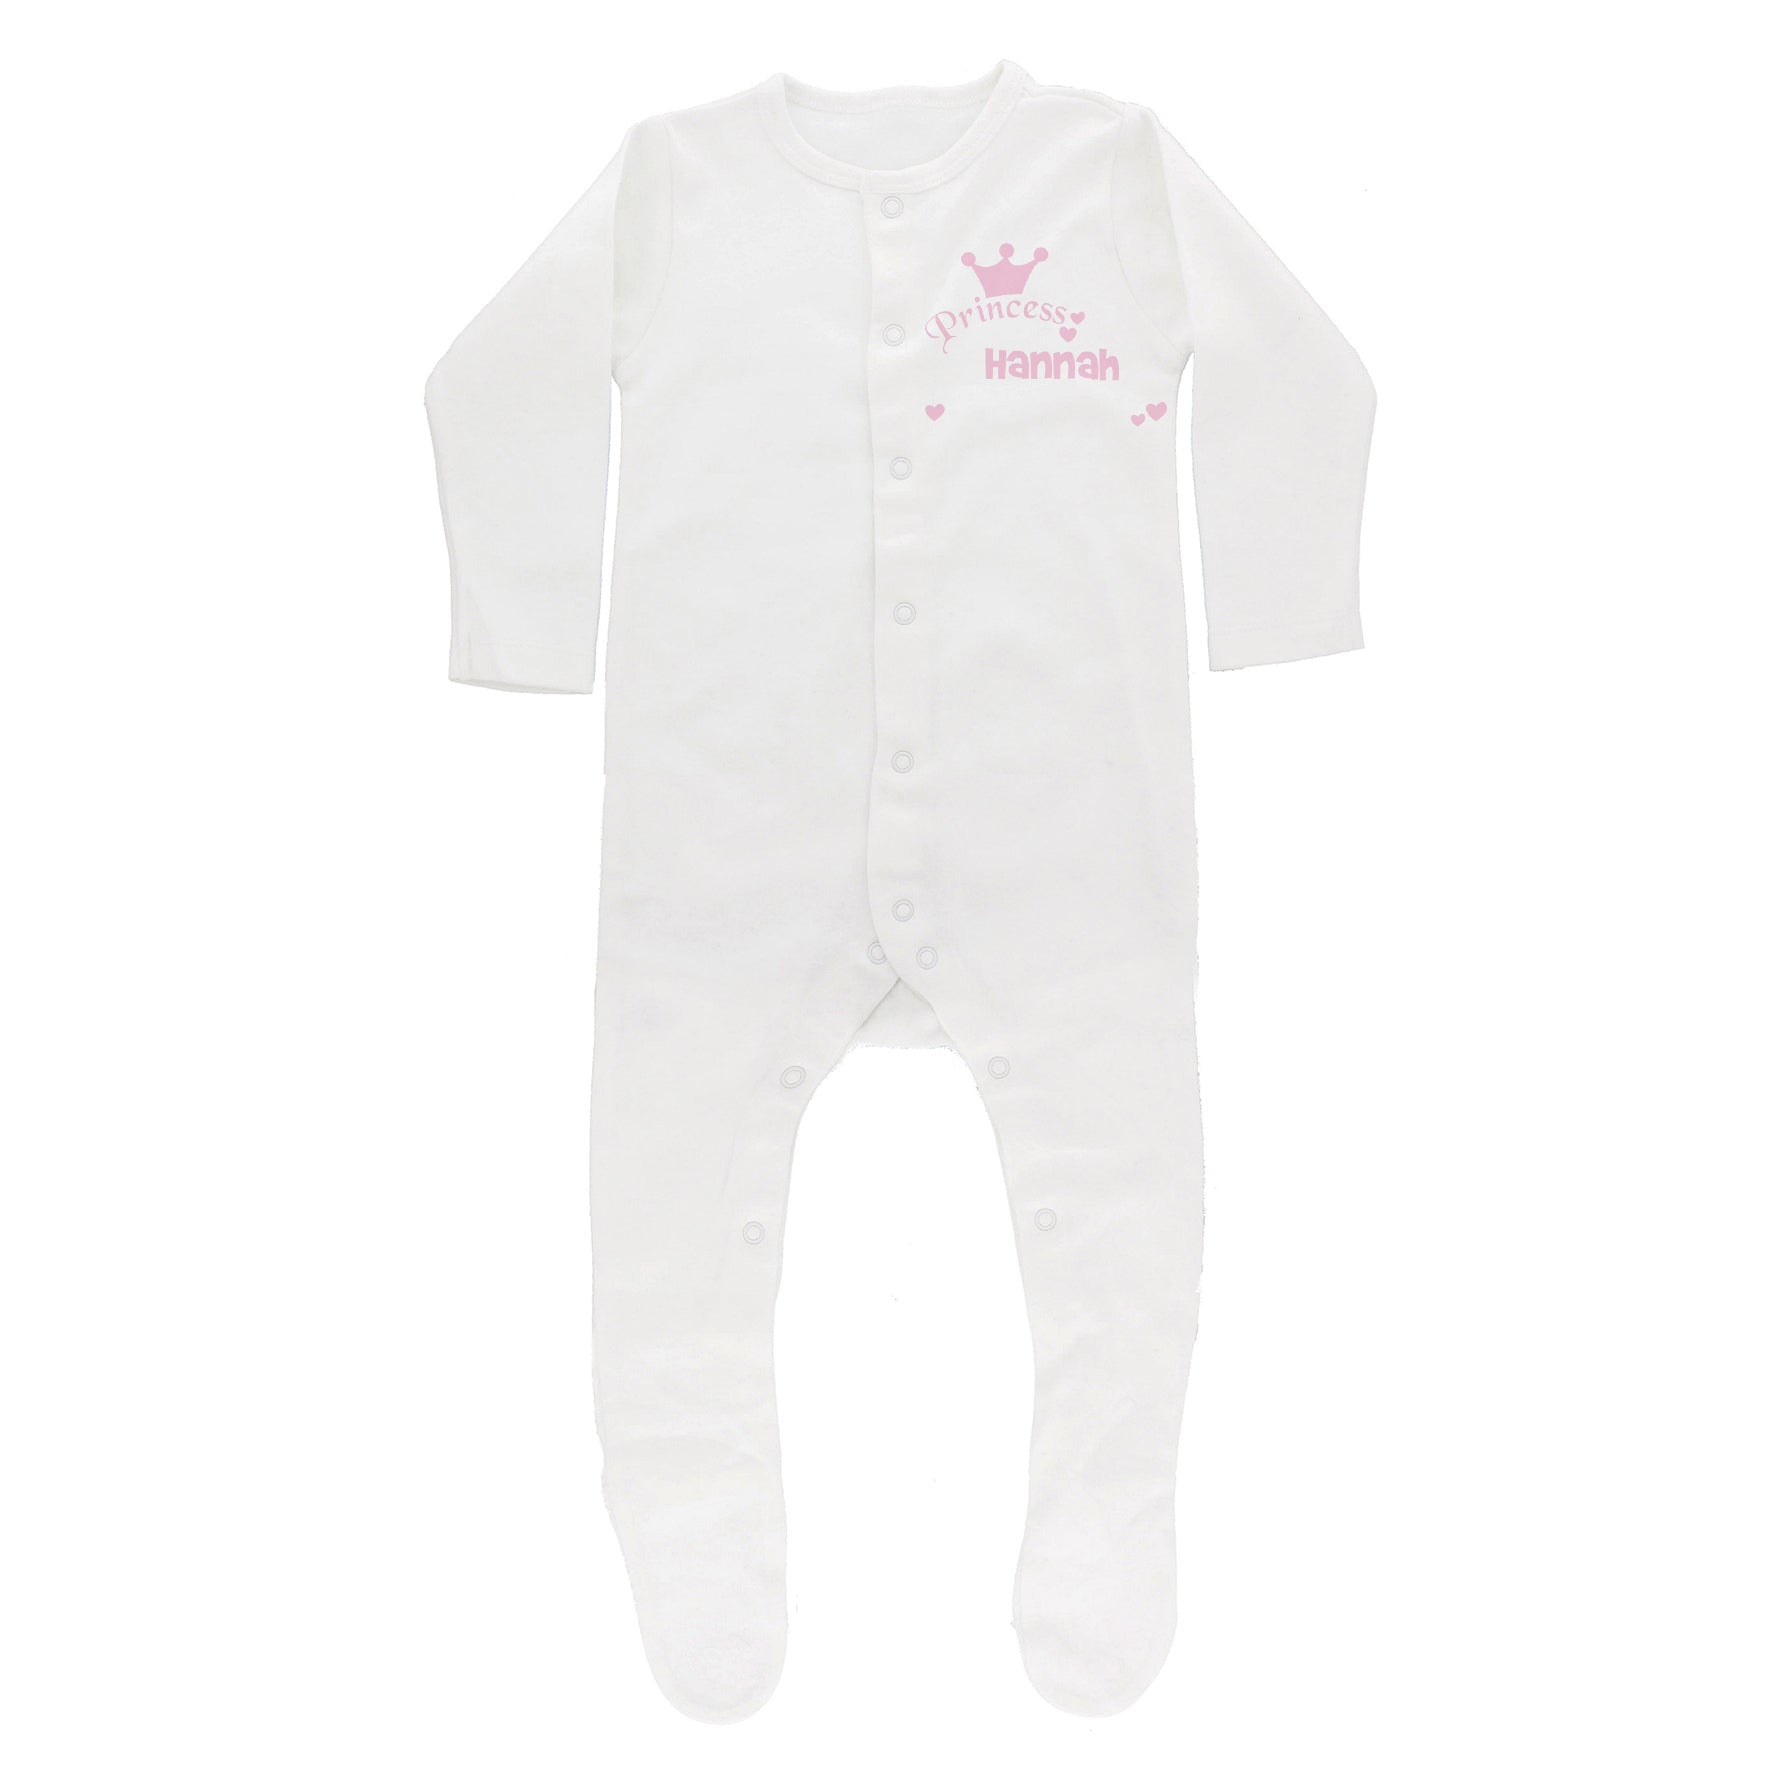 Personalised Babygrow 0-3 Months - Prince/Princess - Violet Belle Gifts - Personalised Babygrow 0-3 Months - Prince/Princess